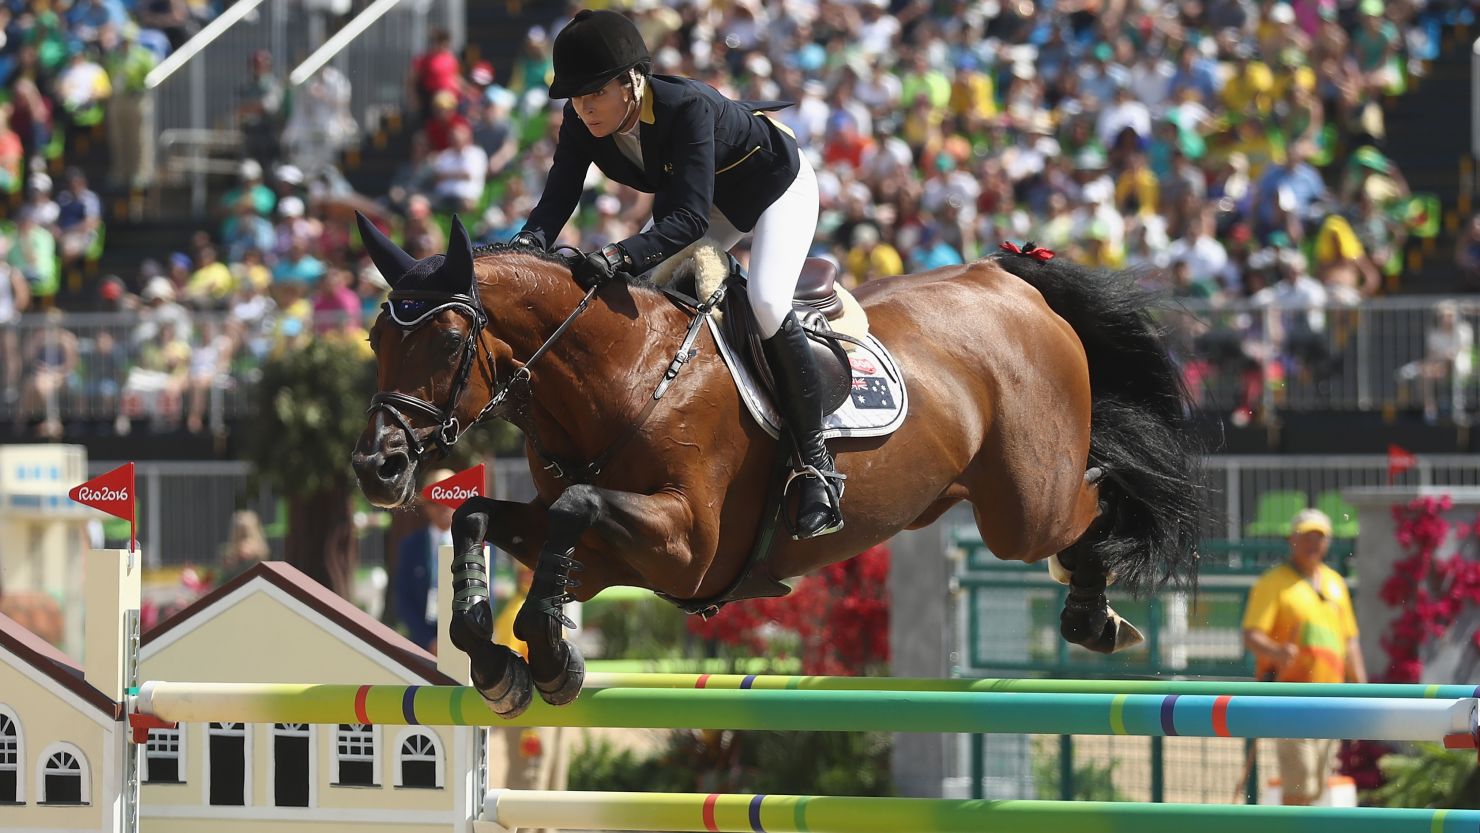 Edwina Tops-Alexander of Australia rides Lintea Tequila during the Rio 2016 Olympics. 